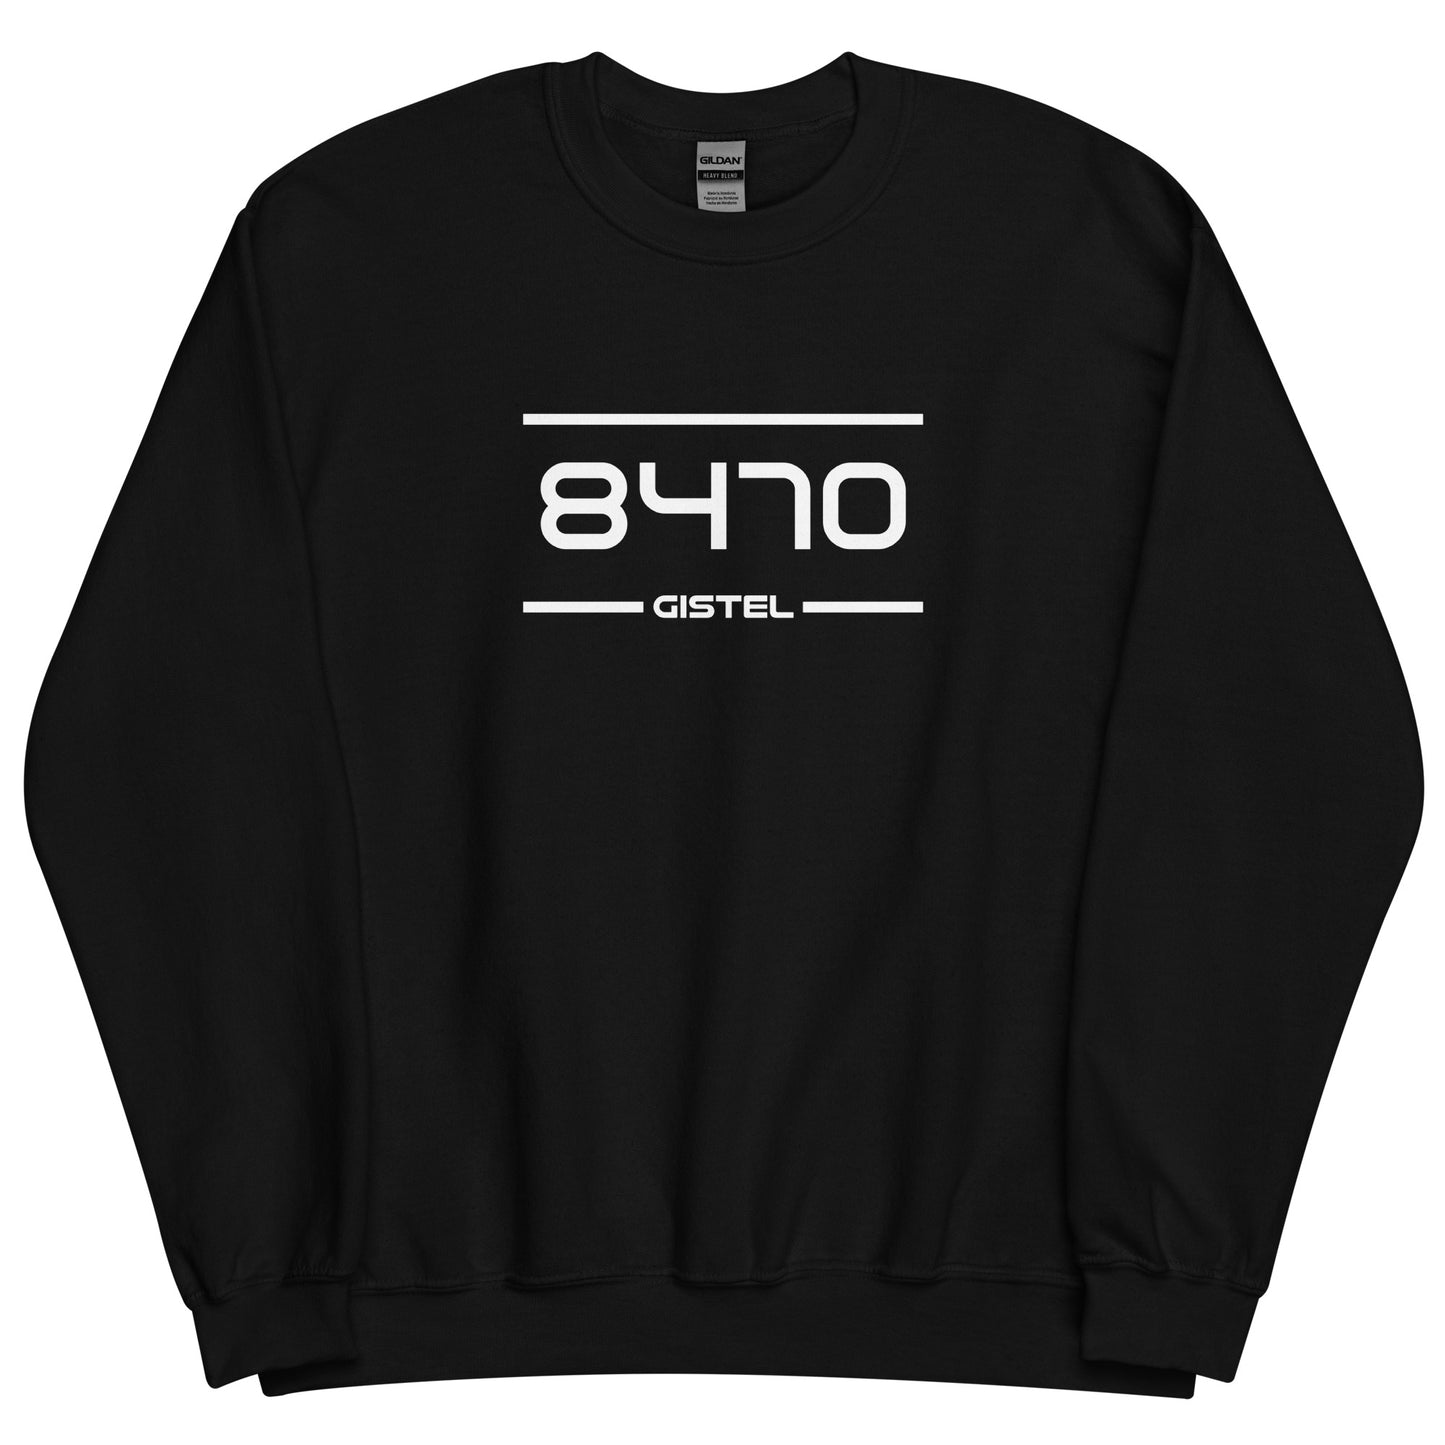 Sweater - 8470 - Gistel (M/V)